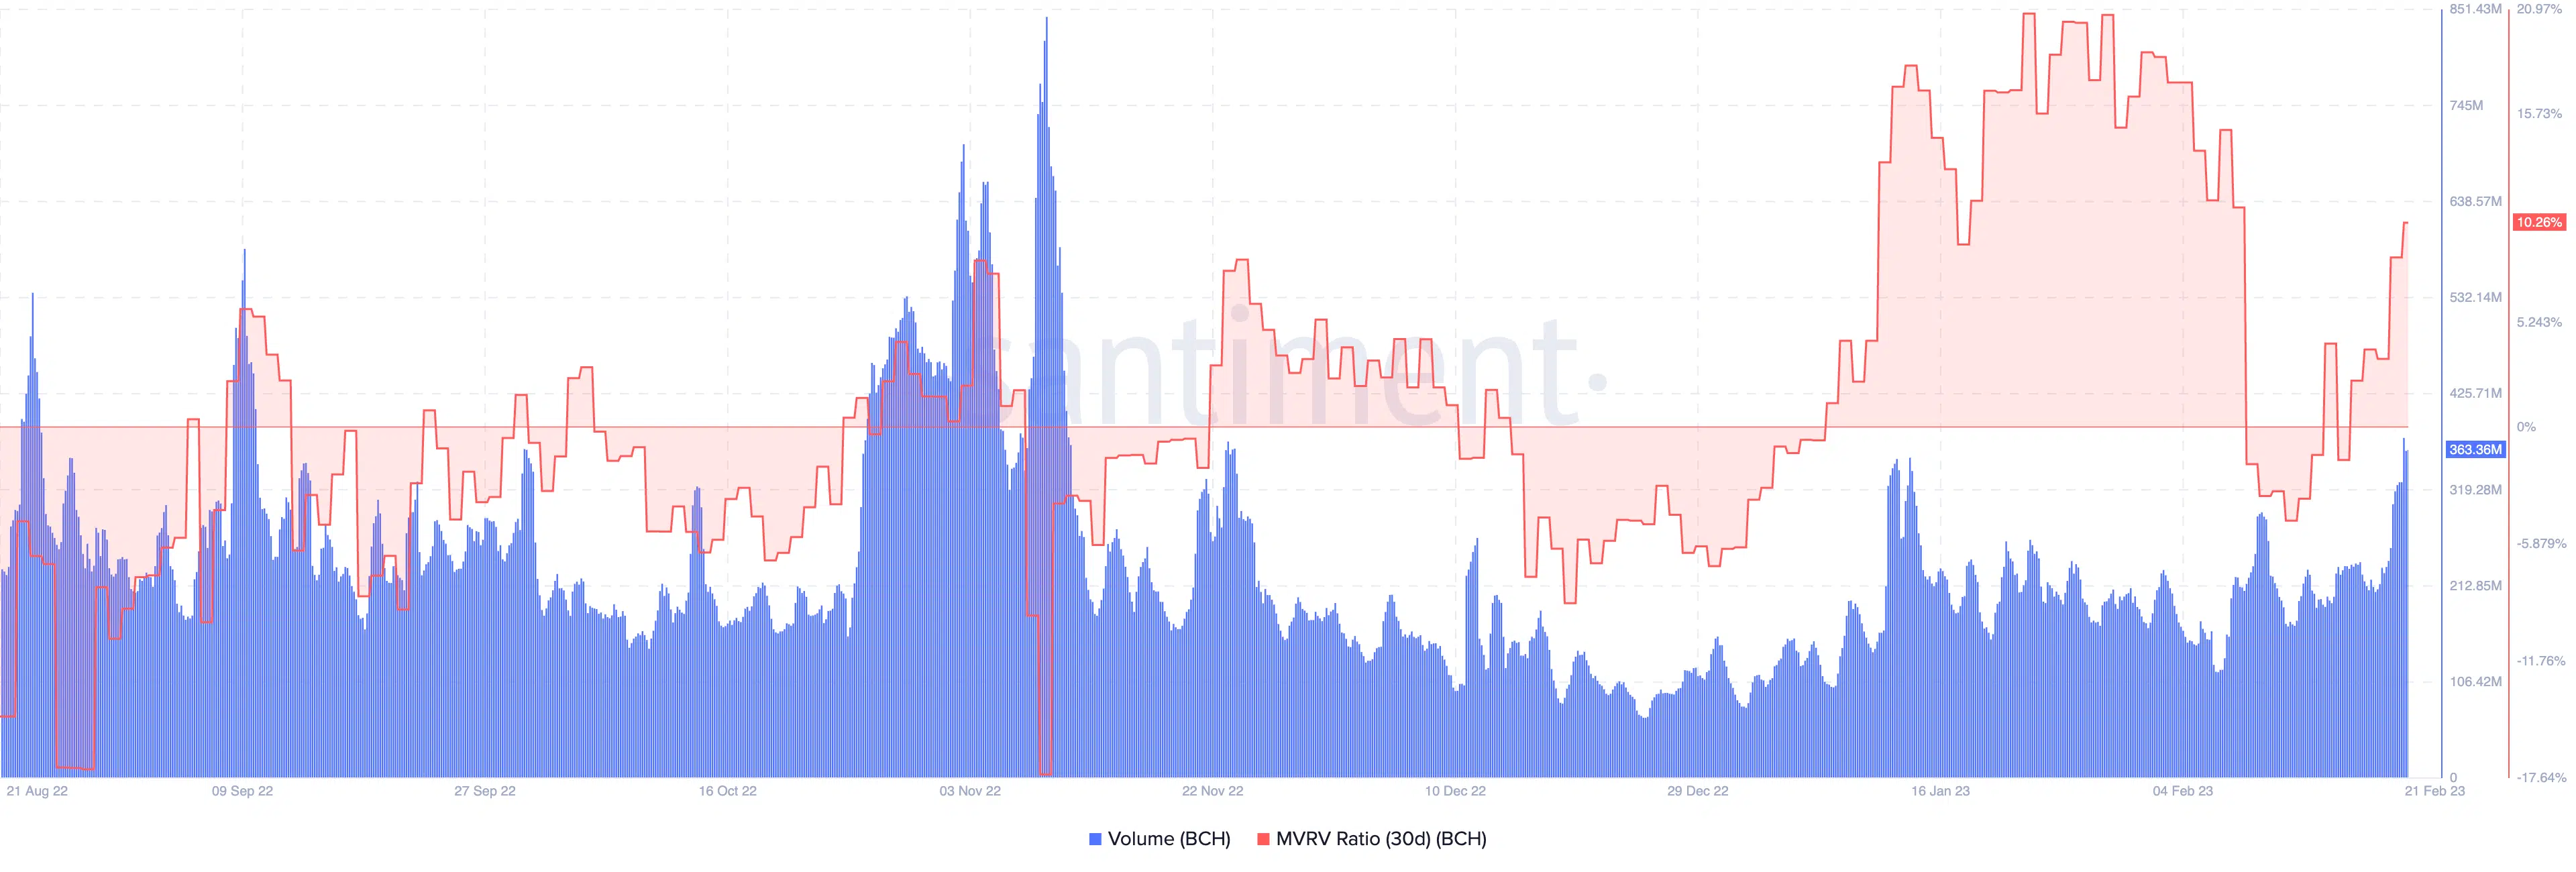 Bitcoin Cash volume and MVRV ratio